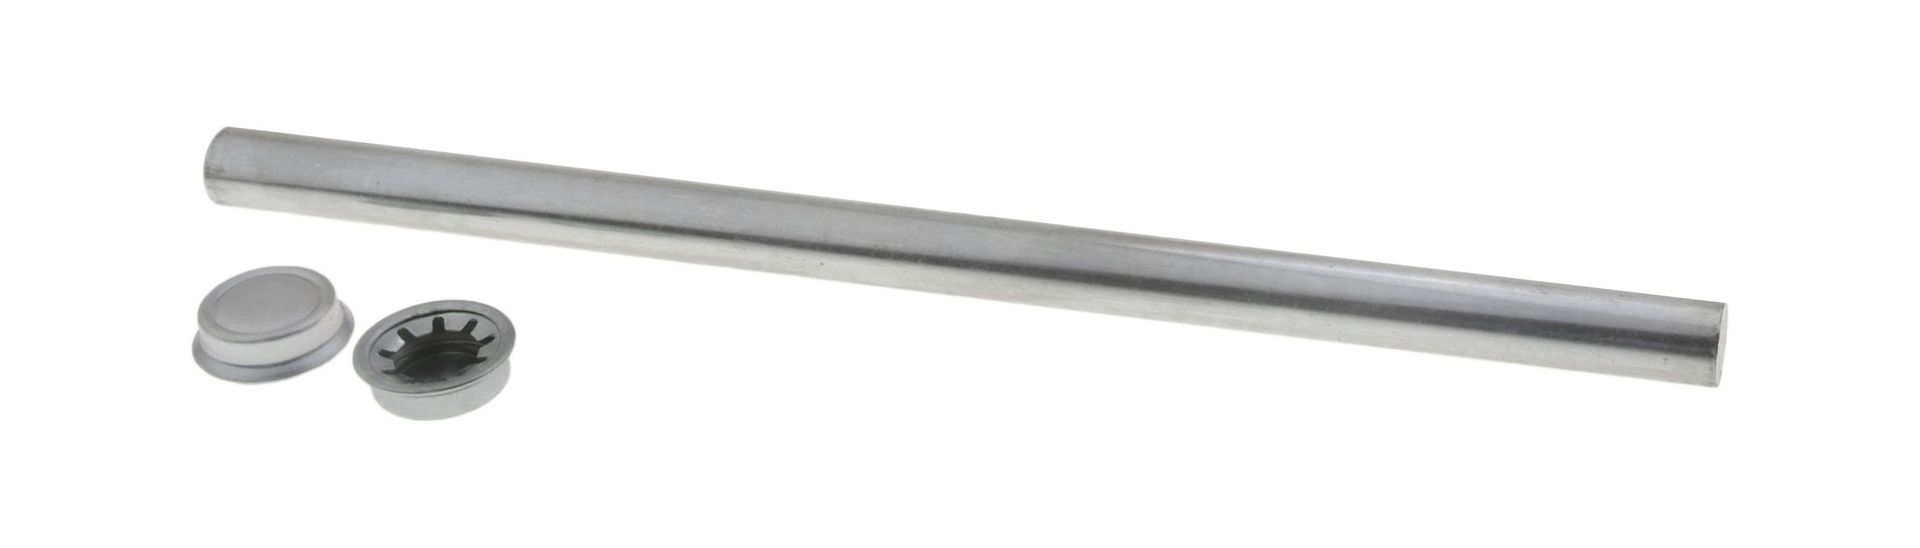 Вал для подкильного ролика 285х16 мм C11284 ключ для натяжного ролика vag jtc